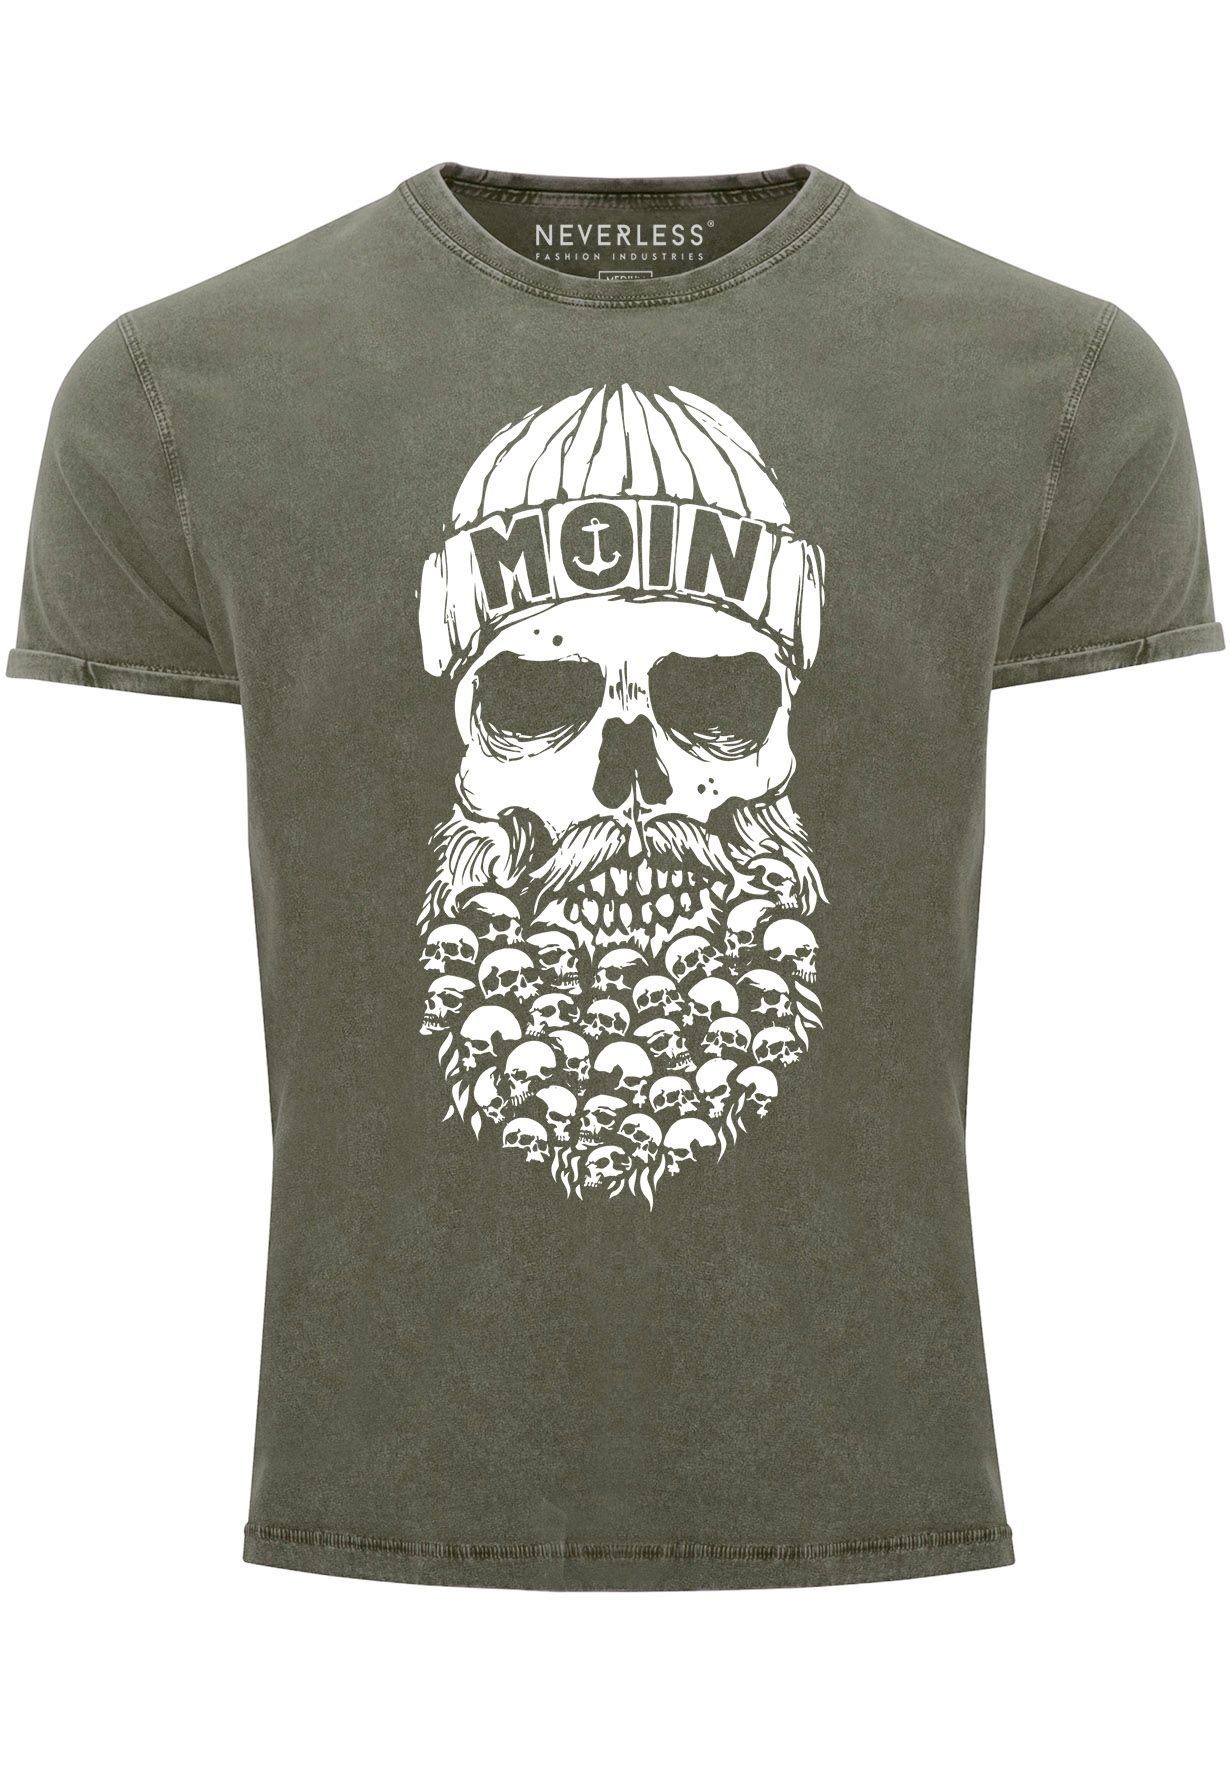 Neverless Print-Shirt Herren Vintage Shirt Totenkopf Nordisch Moin Hamburg Dialekt Skull Ank mit Print oliv